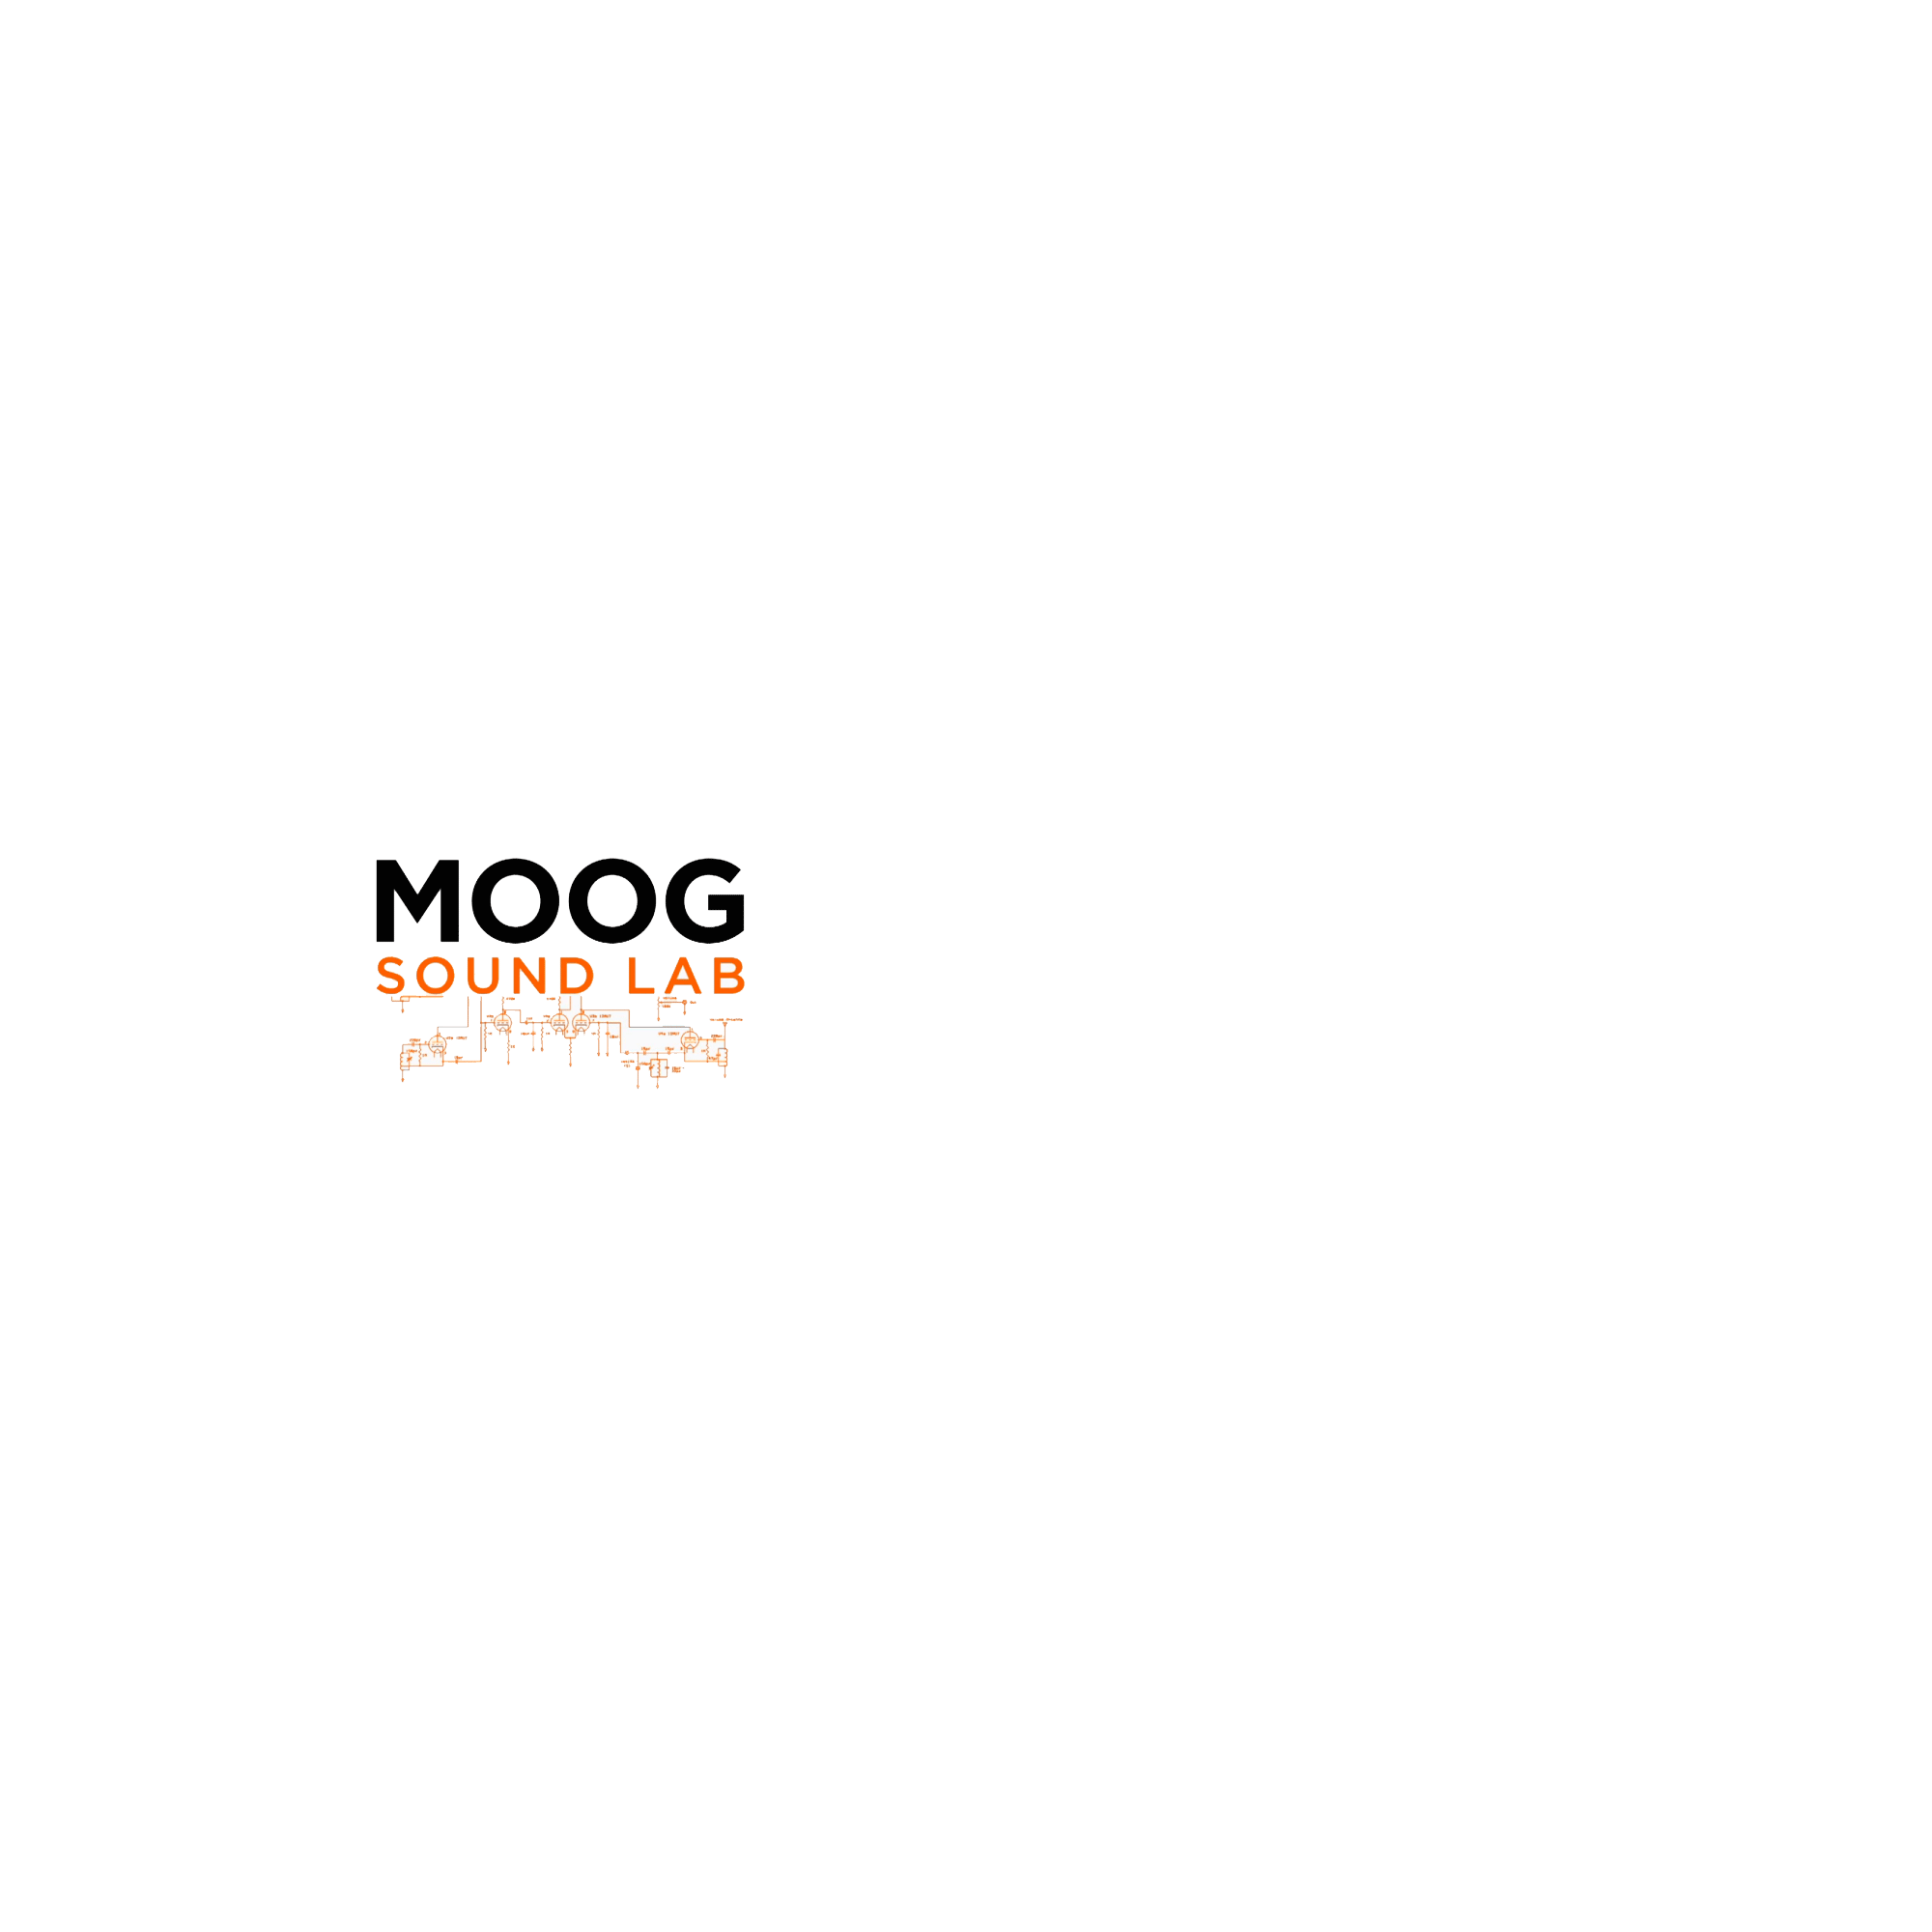 Moog Music Premiers New Sound Lab Video Series